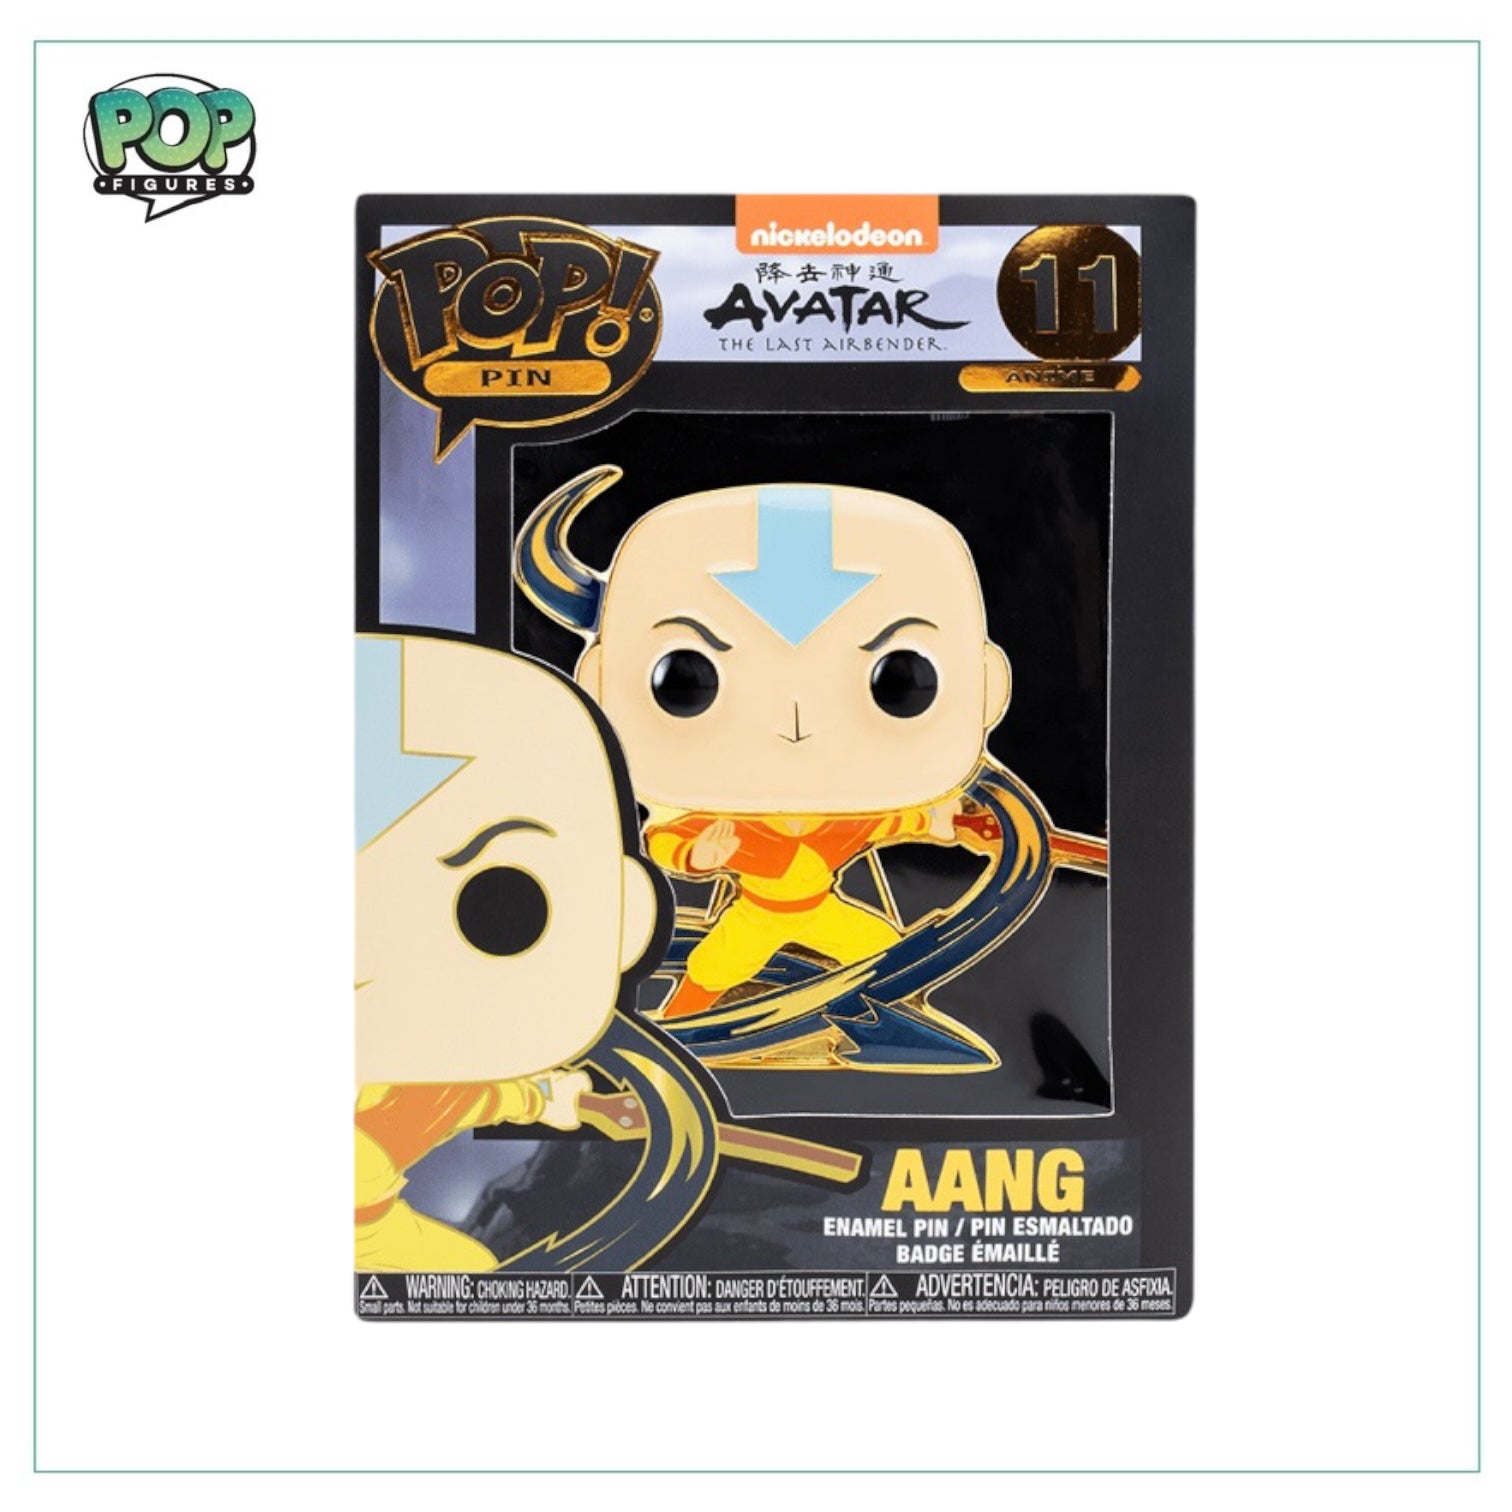 Aang #11 Funko Pop Pin! - Avatar